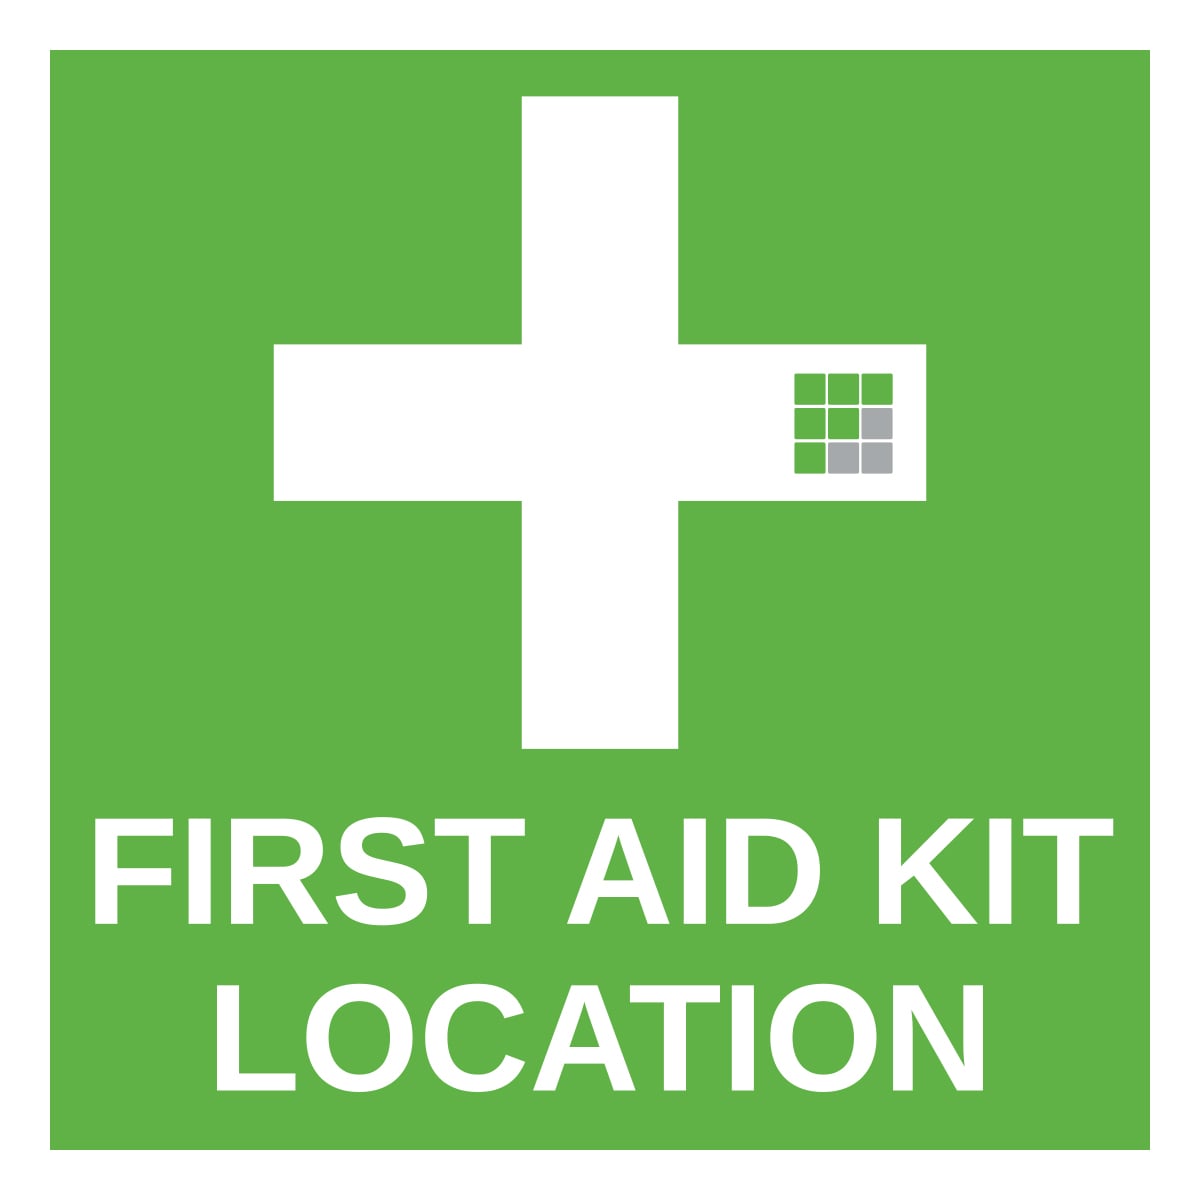 first aid kit location - 1x1ft.jpg